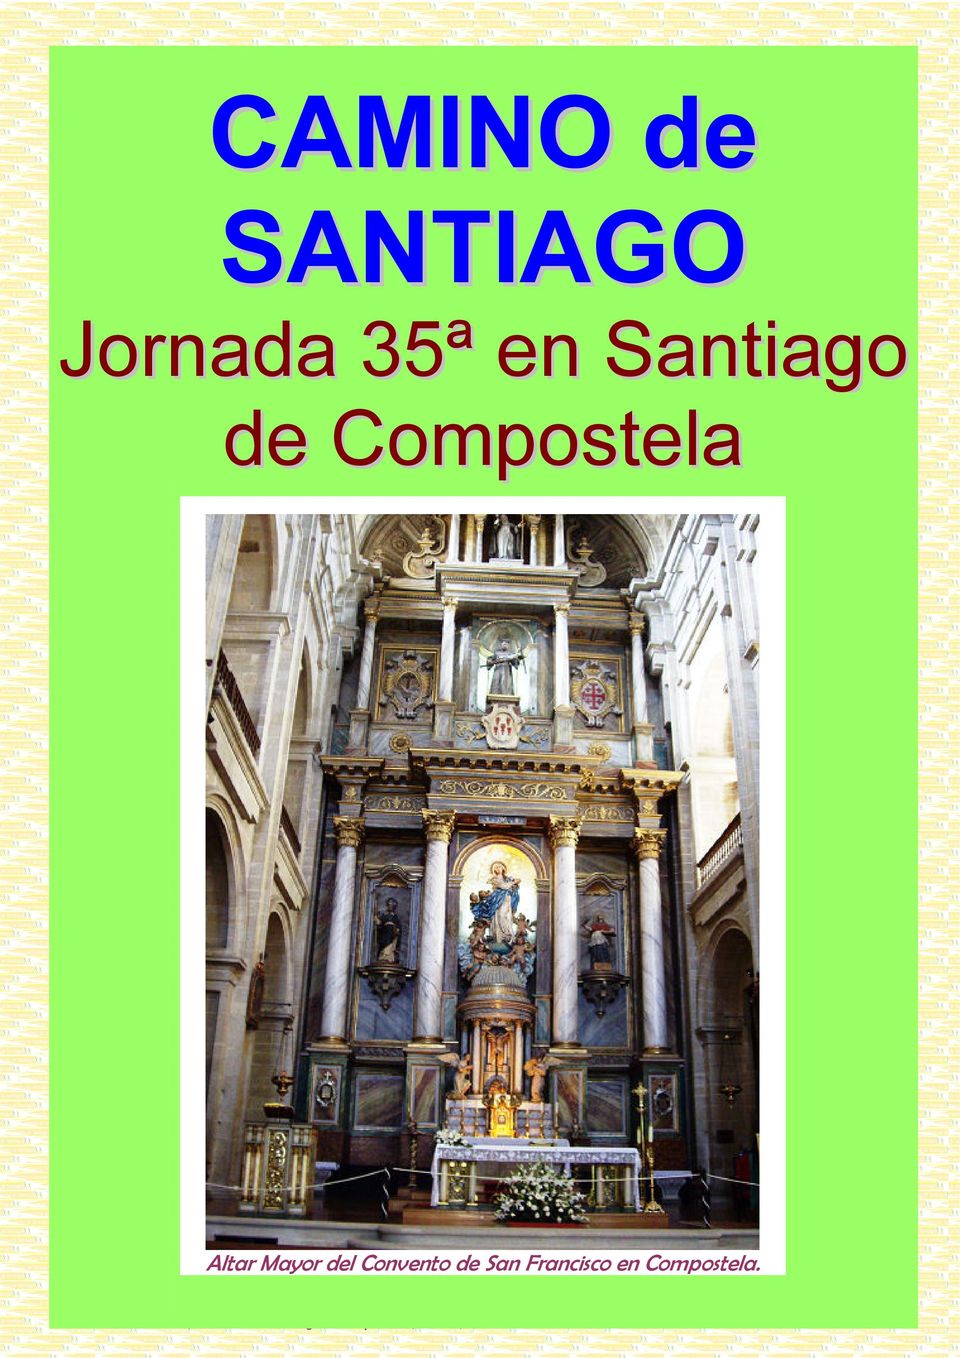 Compostela Altar Mayor del